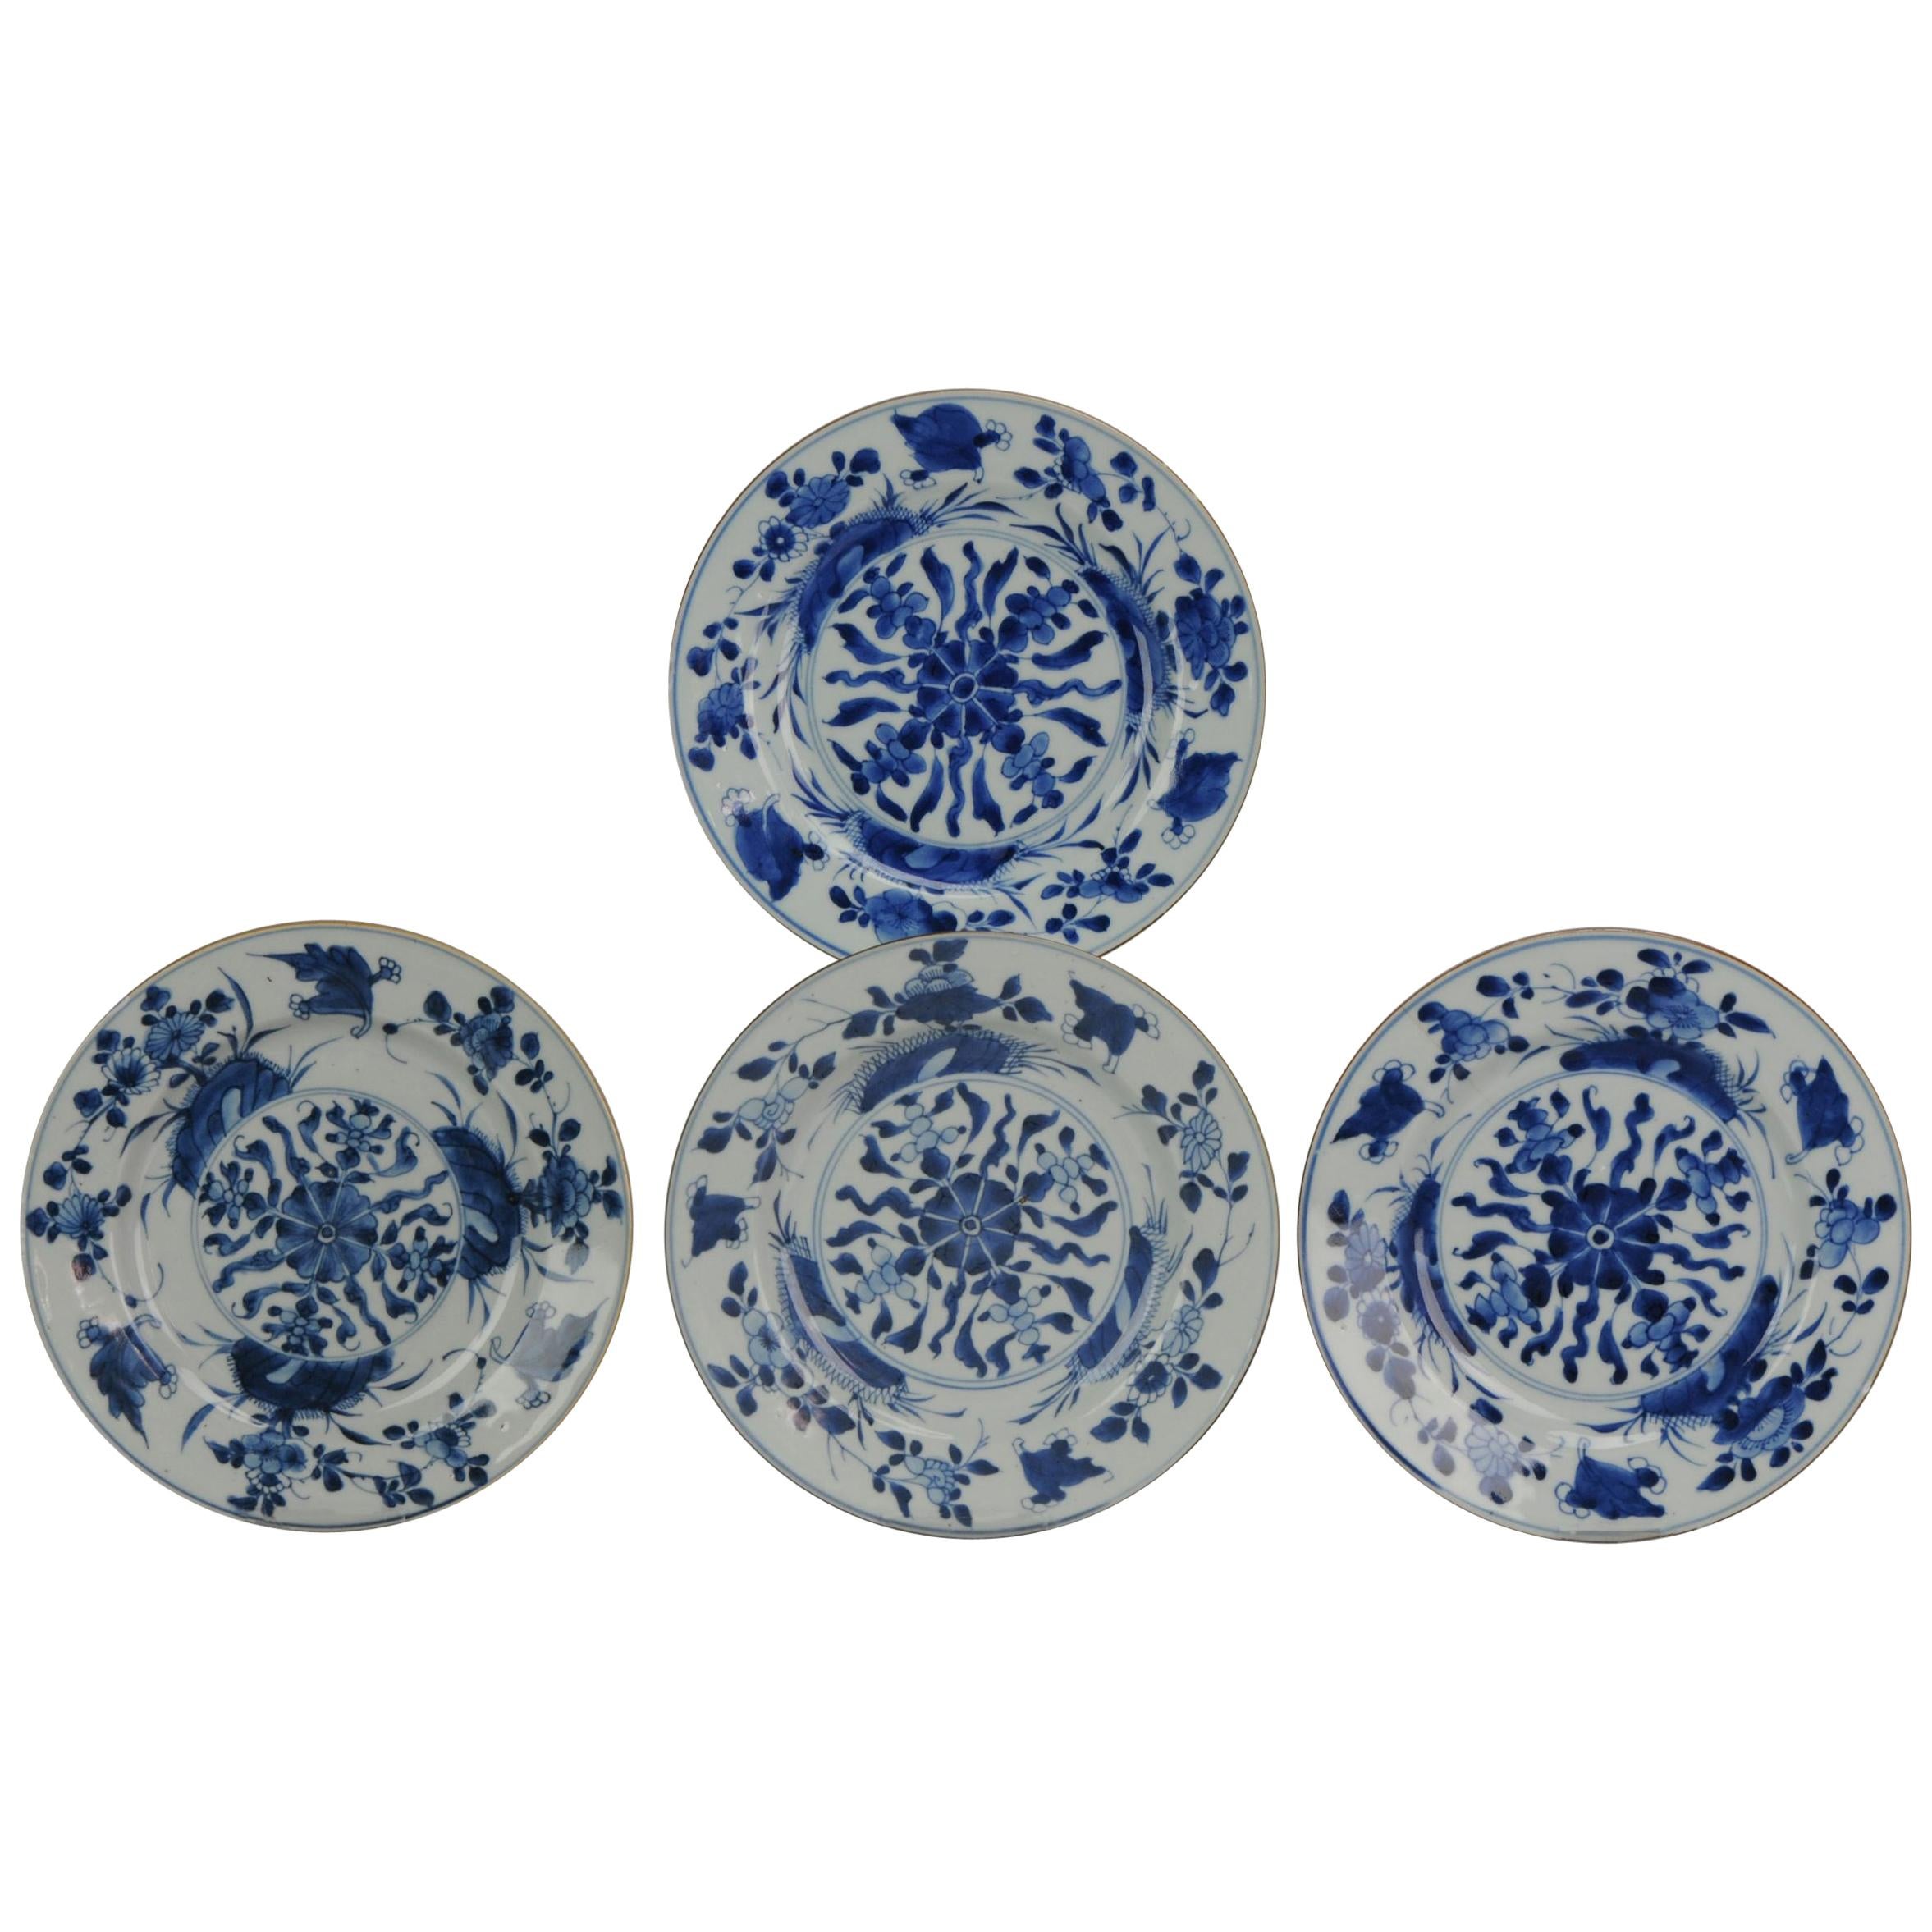 Antiguo Plato de Porcelana China Siglo XVIII Periodo Kangxi Azul Blanco